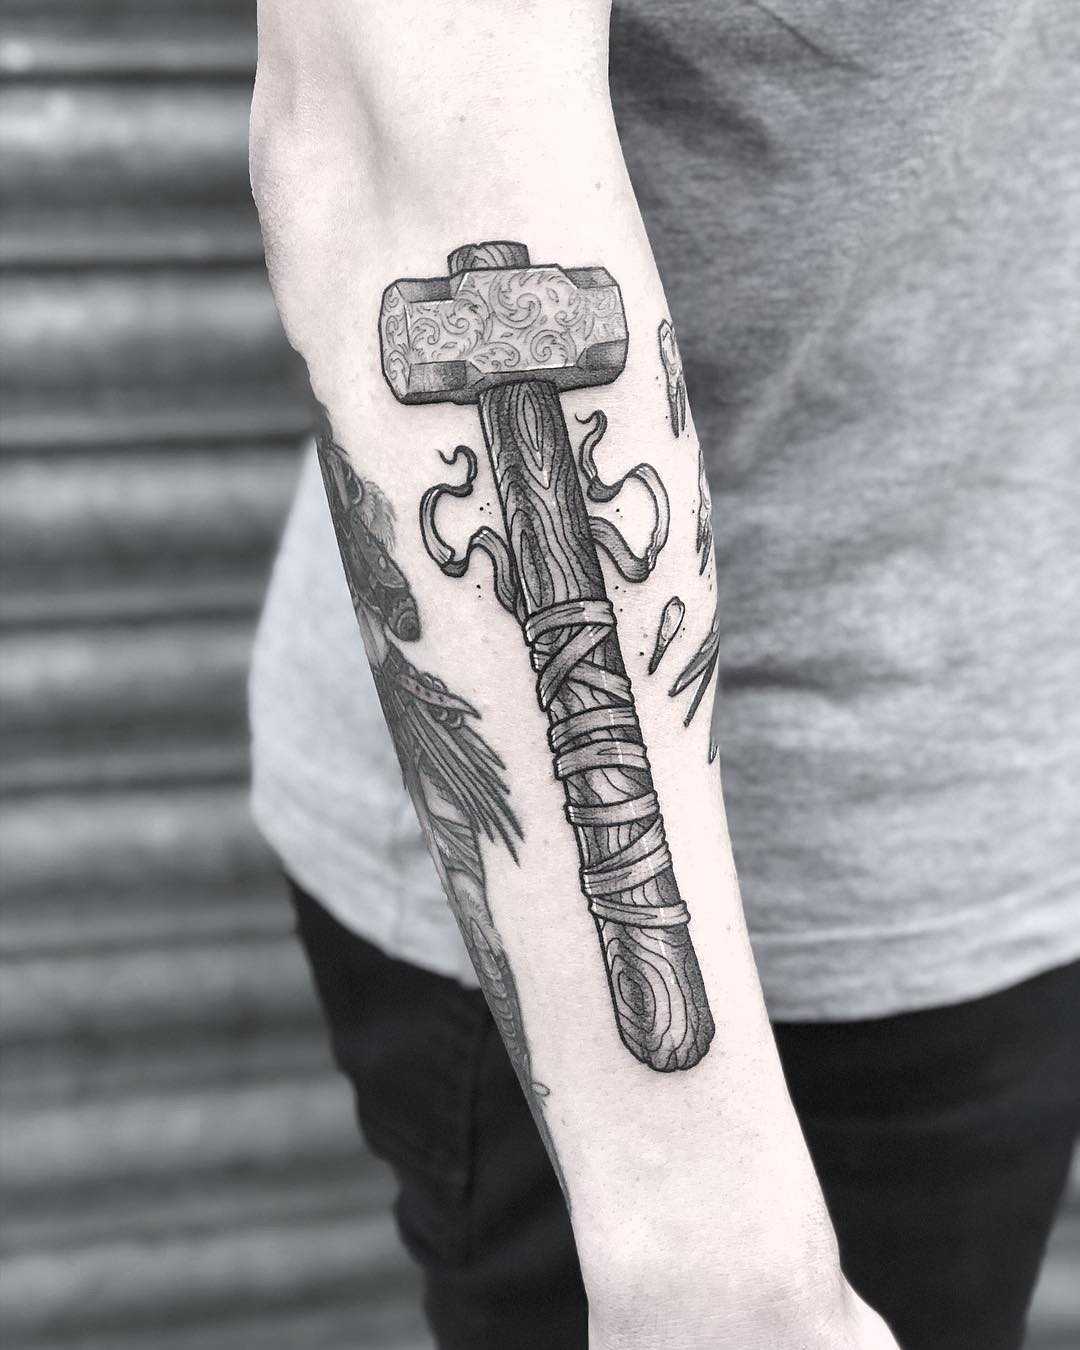 Sledge hammer tattoo by Lozzy Bones